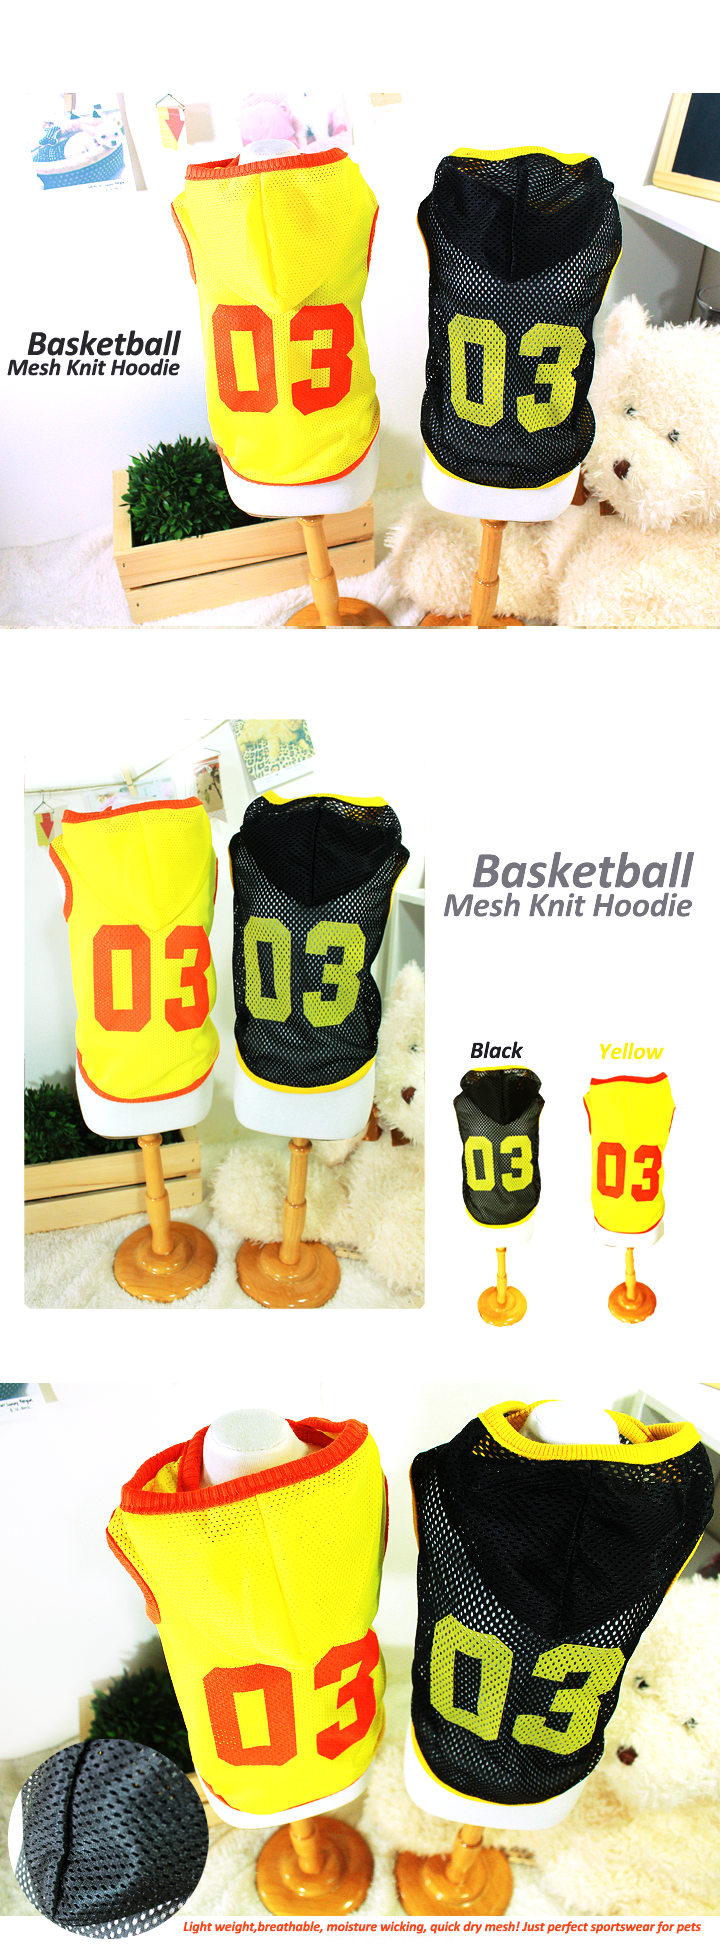 basket-ball-mesh-knit-hoodie-1.png